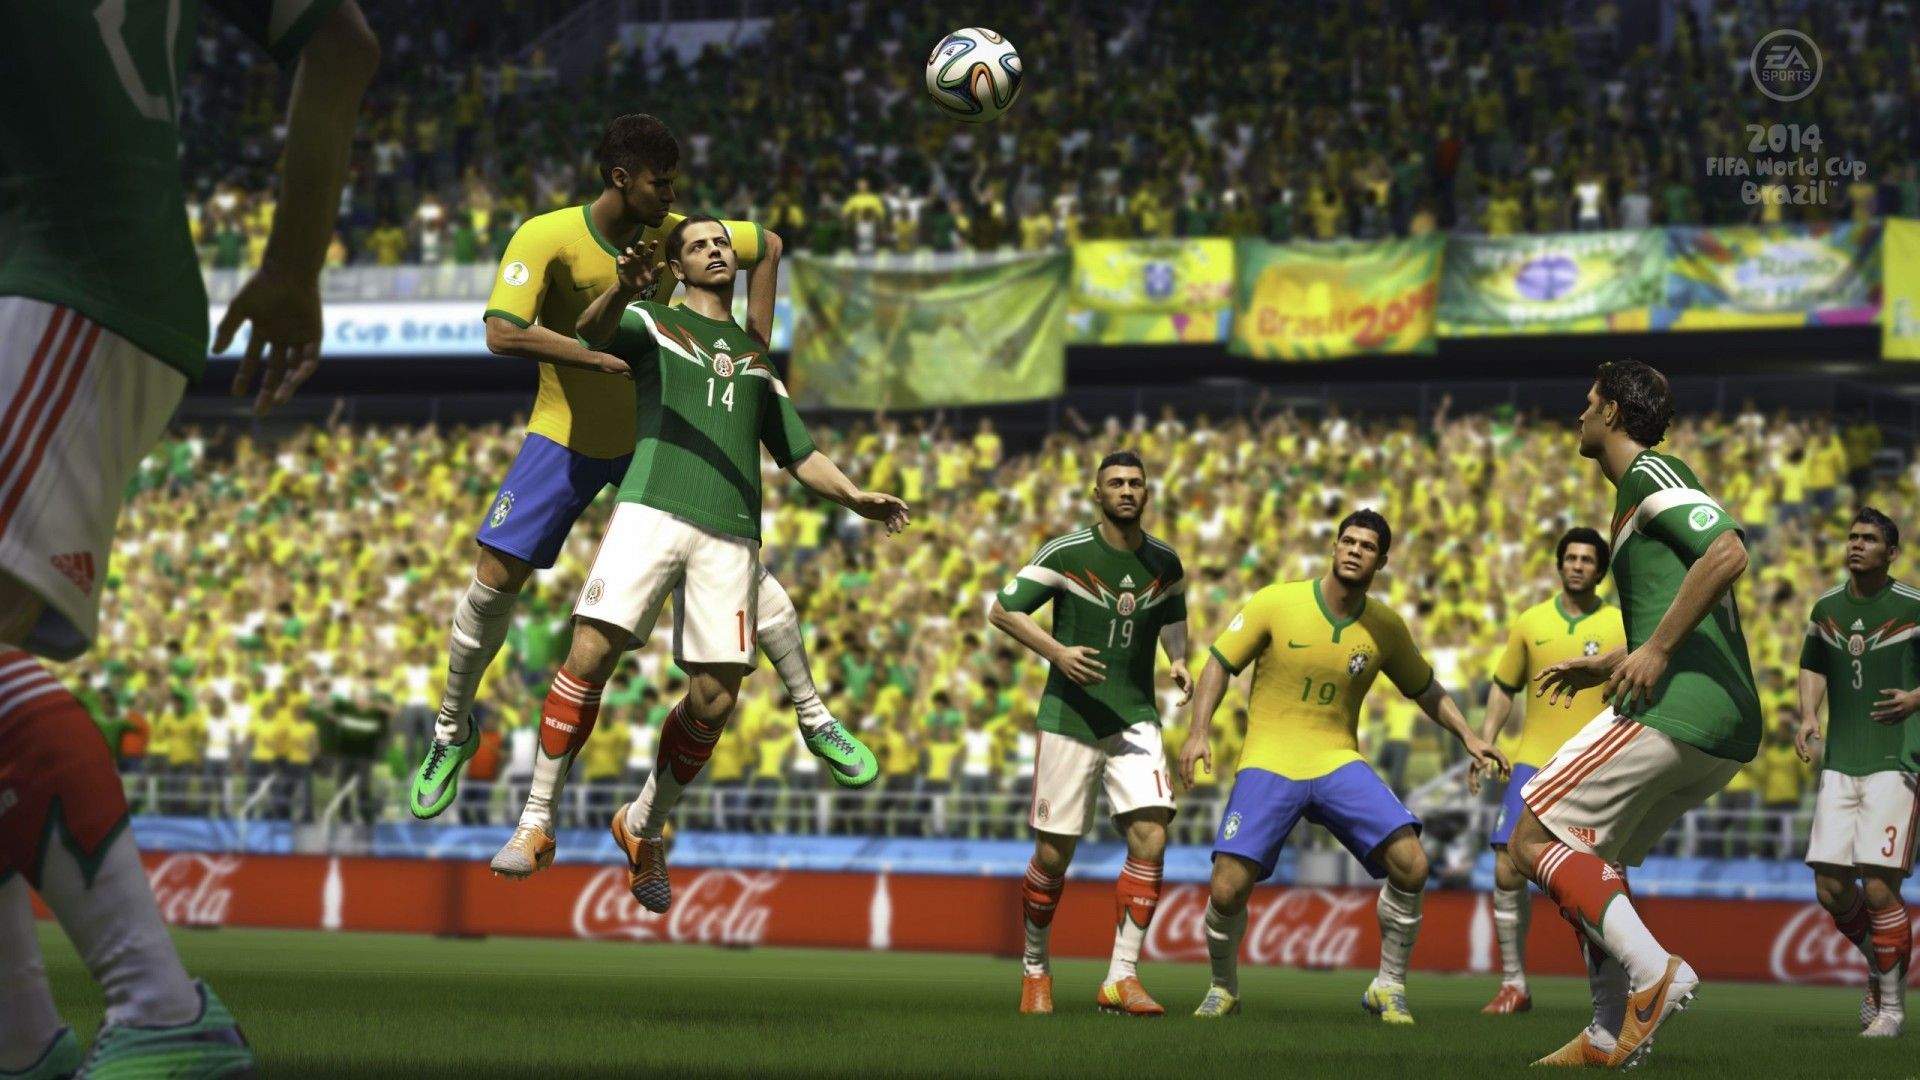 World cup 2014. Brazil 2014 World Cup. ФИФА 2014 Бразилия. ФИФА ЧМ 2014. ФИФА 2014 ЧМ игра.